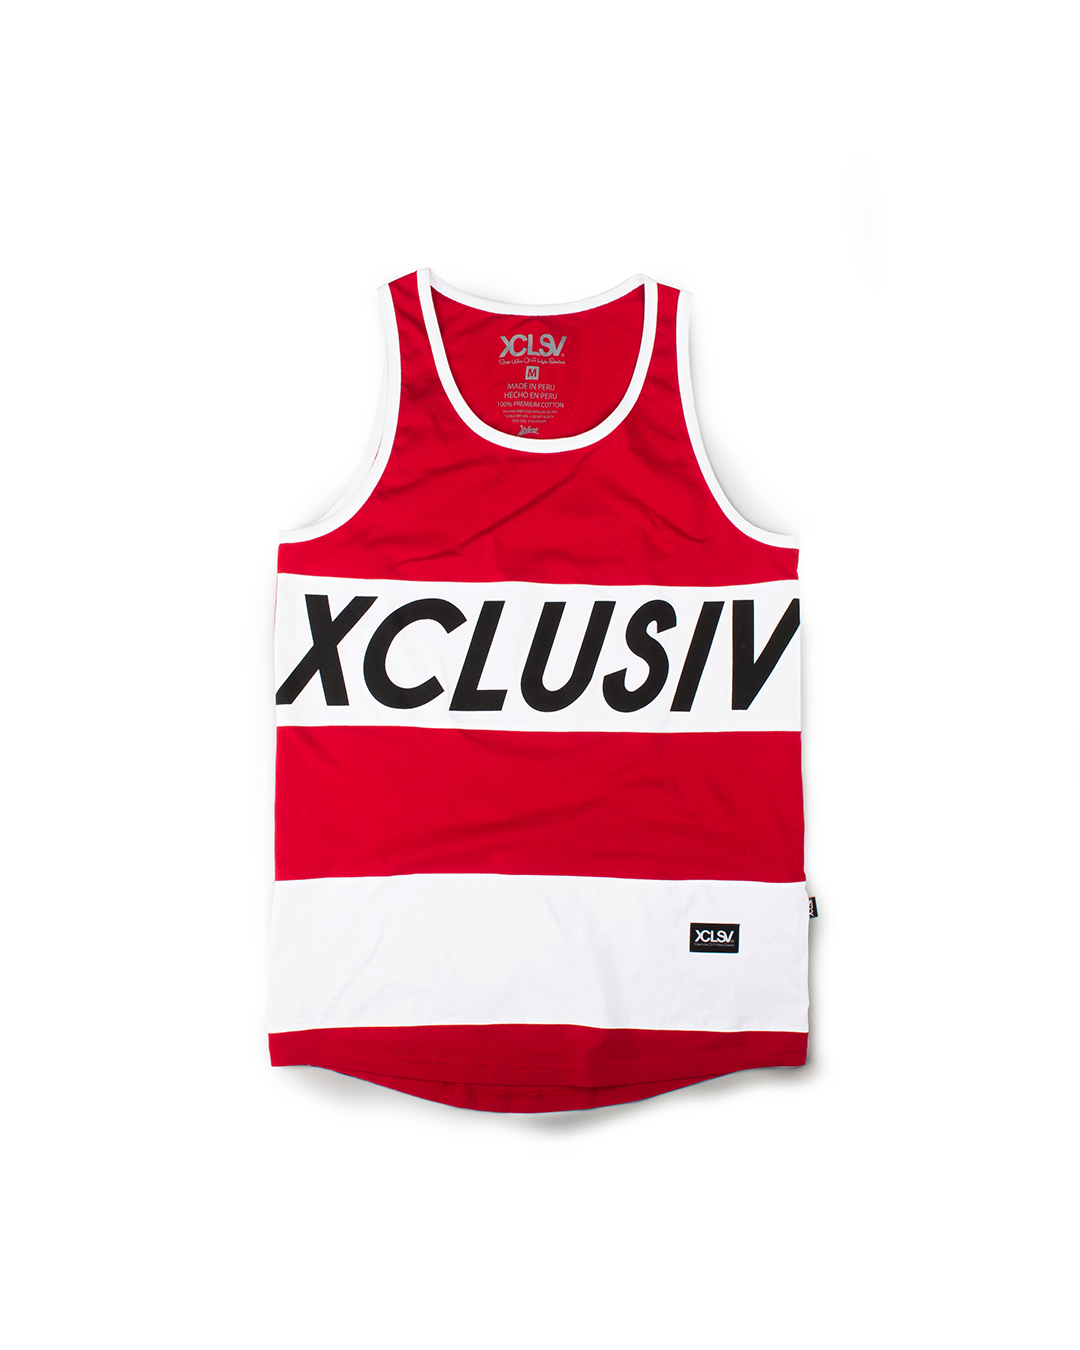 XCLUSIV RED S2 TANK TOP - Xclusiv Clothing Company